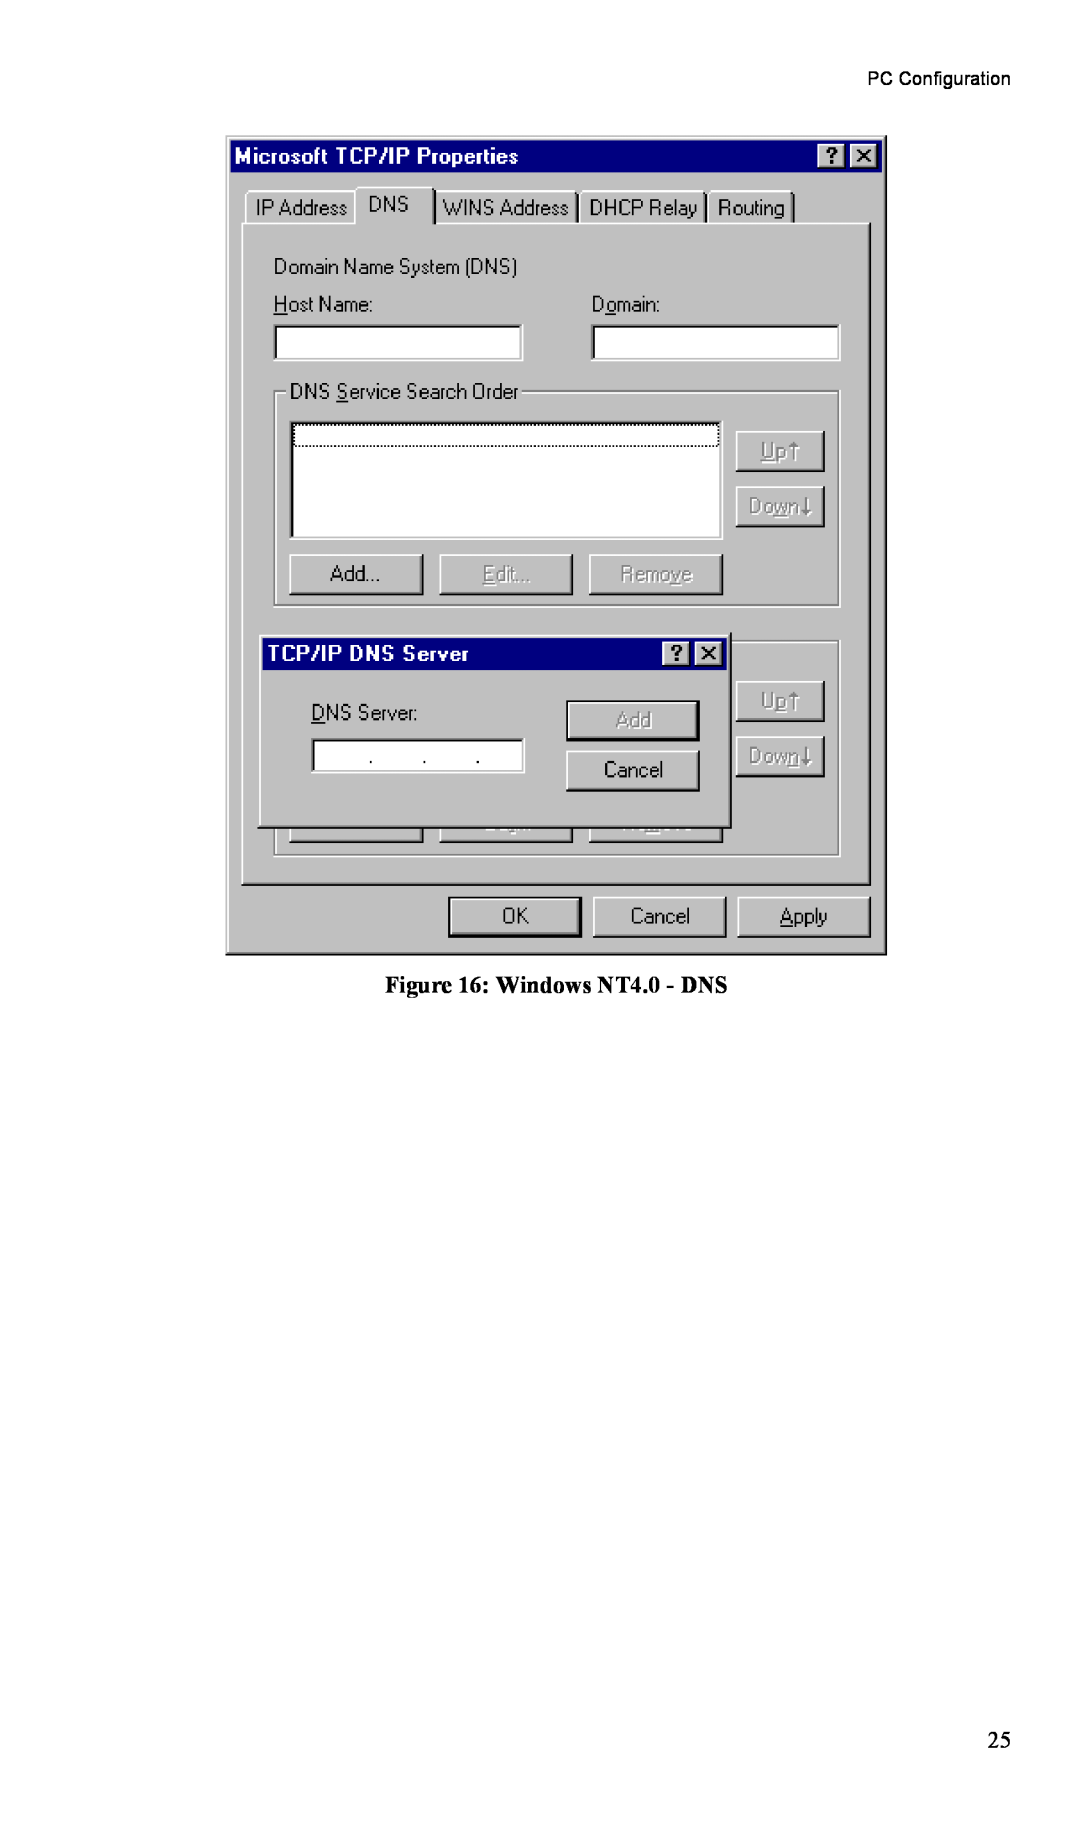 TRENDnet TW100-BRV204, VPN Firewall Router manual Windows NT4.0 - DNS, PC Configuration 